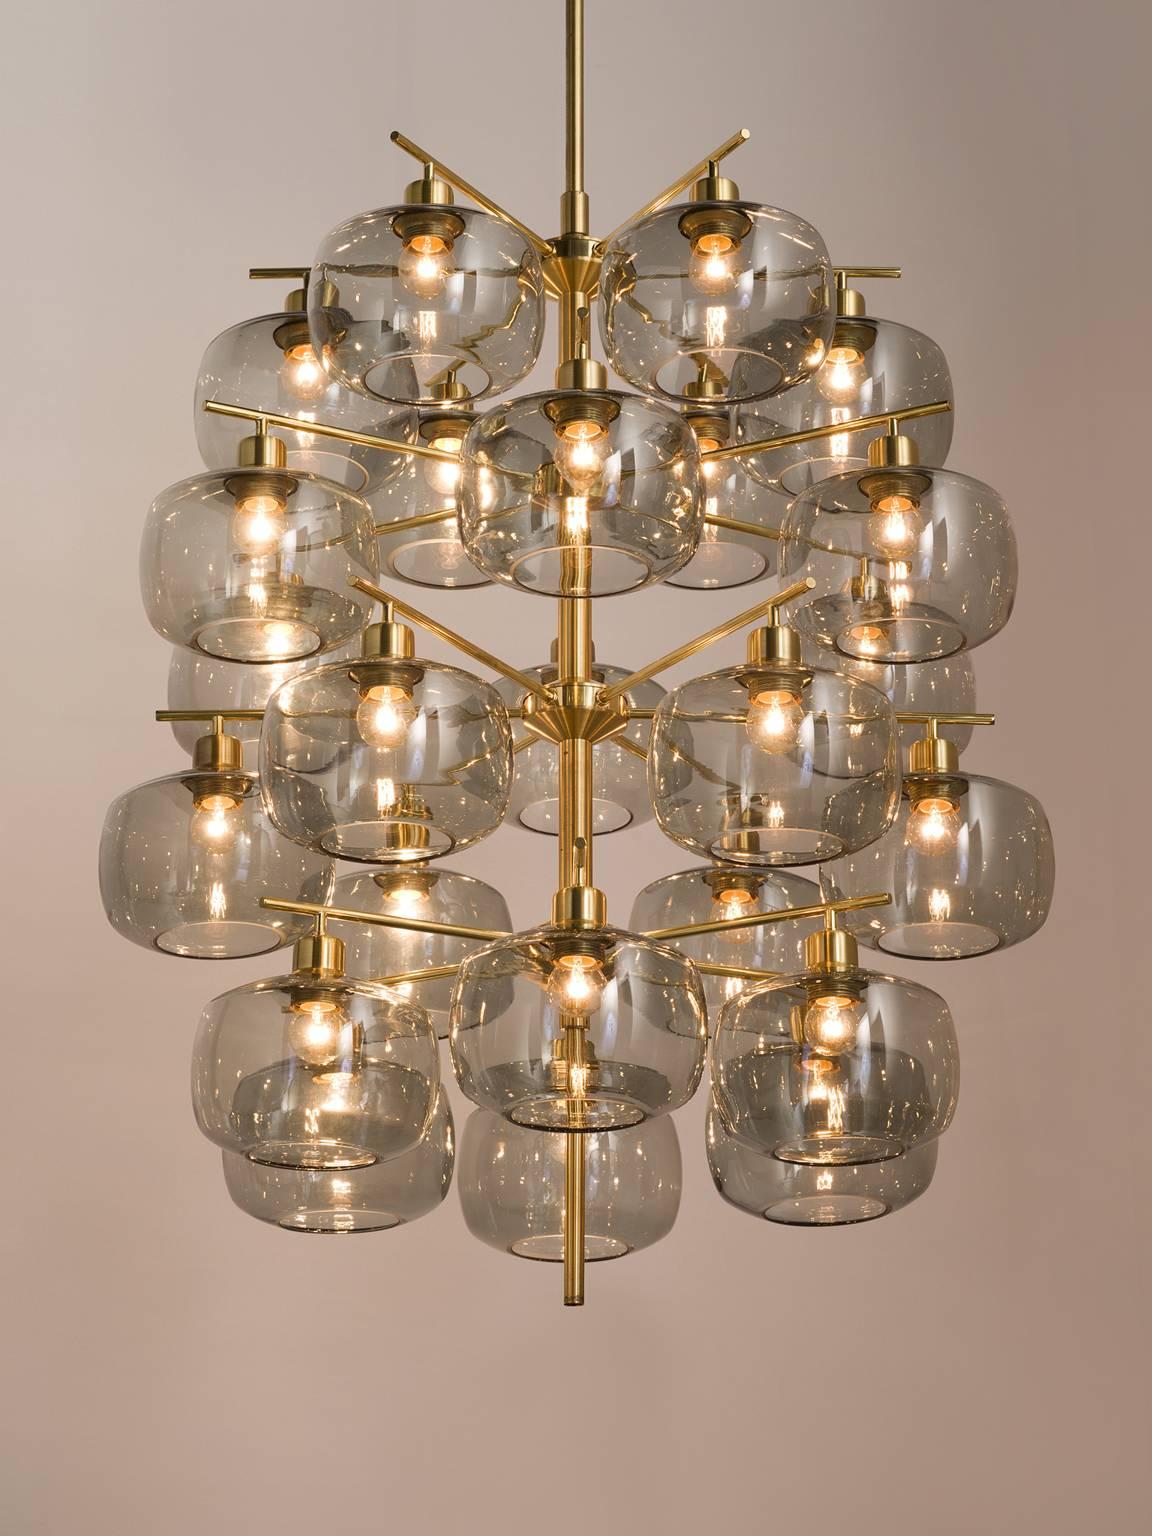 Scandinavian Modern Eight Holger Johansson Chandeliers with 24 Smoked Glass Bulbs, 1952